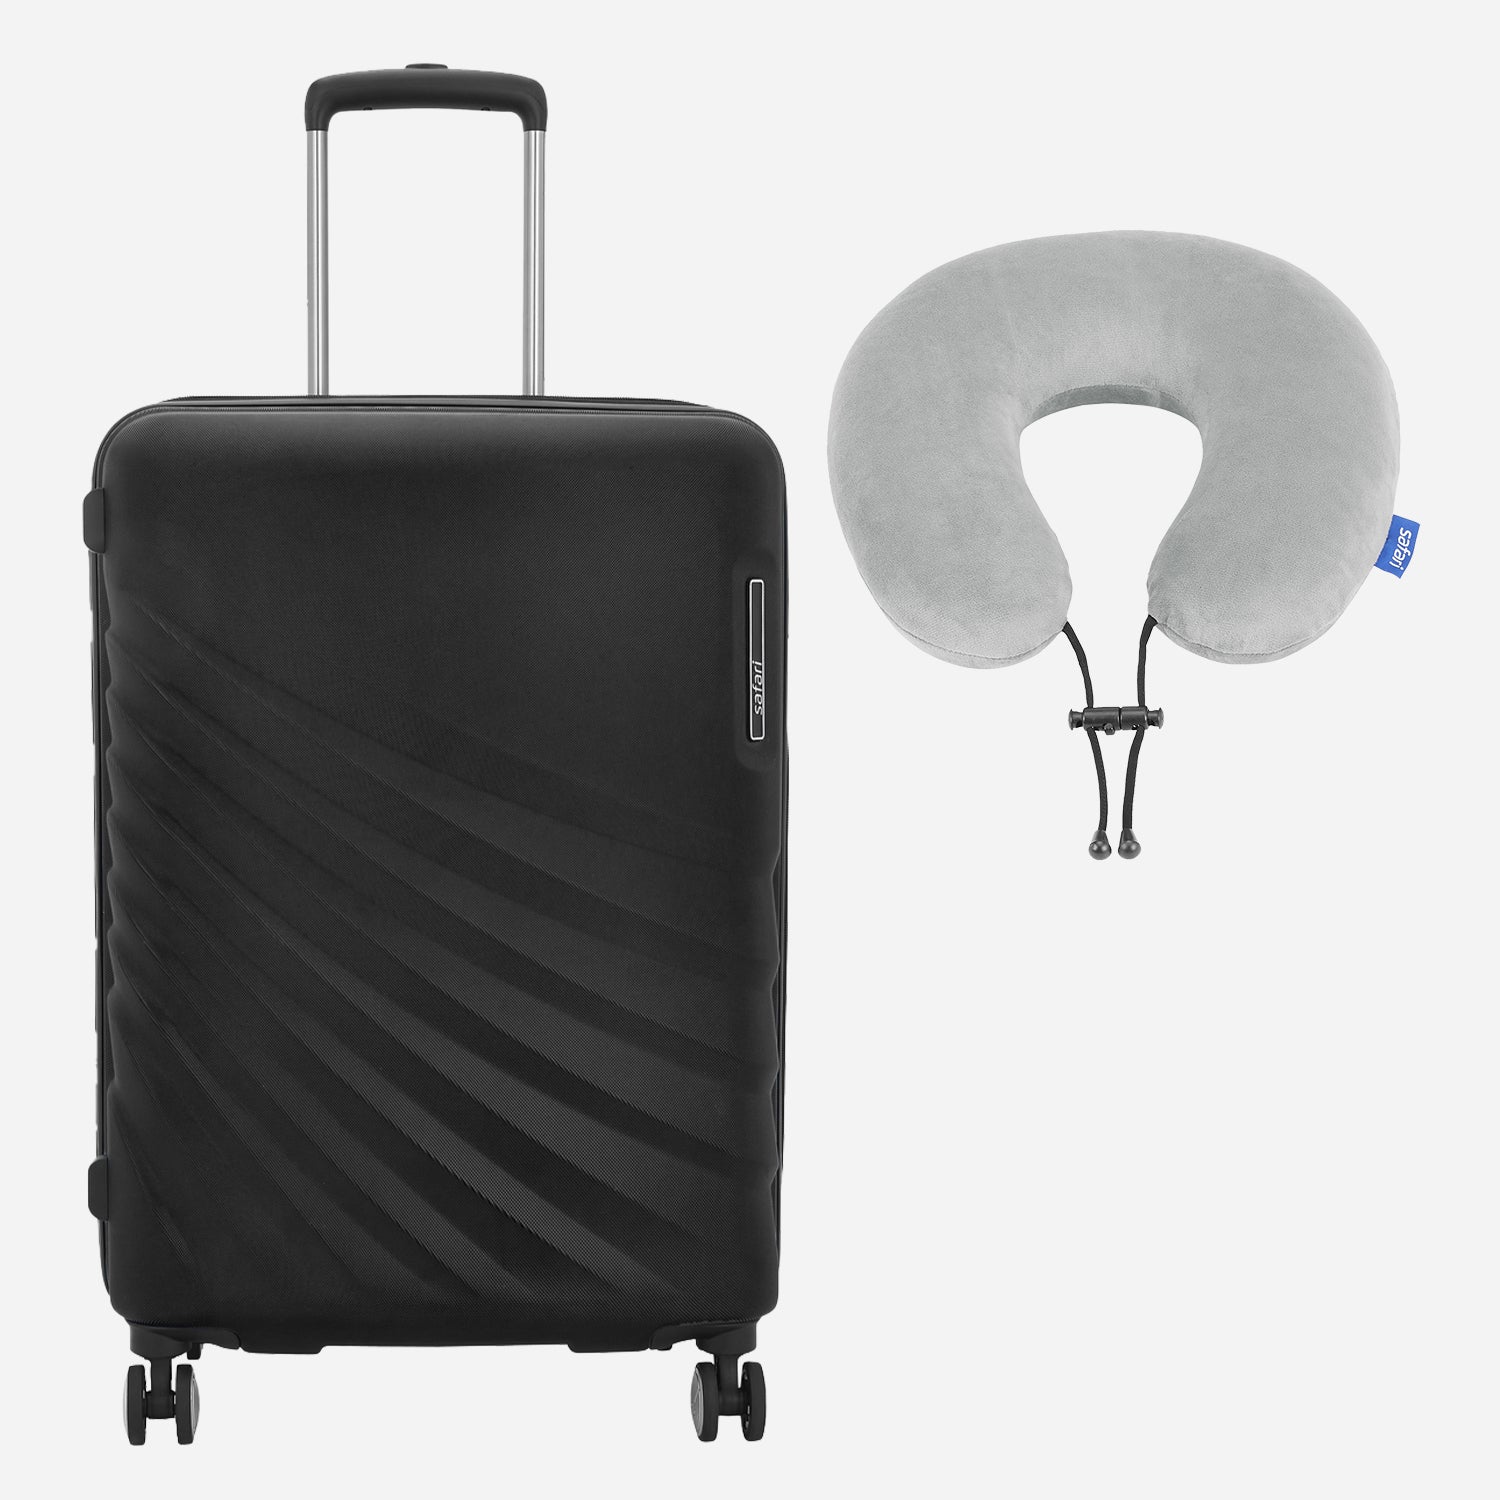 Polaris Hard Luggage cabin size and Basic Neck Pillow - Black